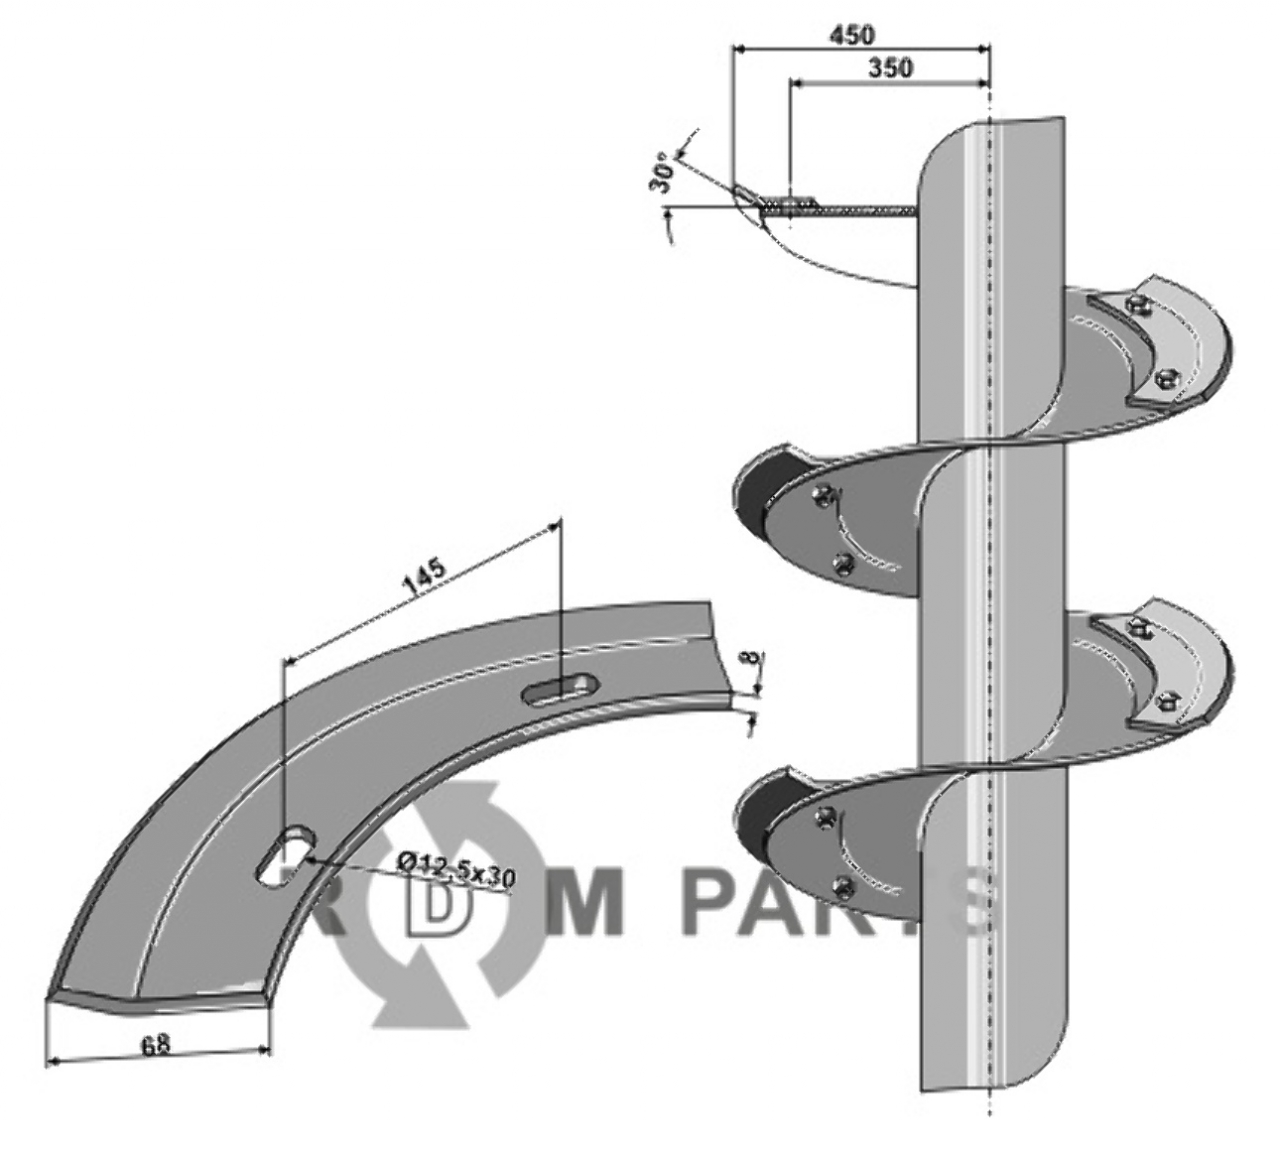 RDM Parts Snail segment - right model fitting for Hemos 93015200